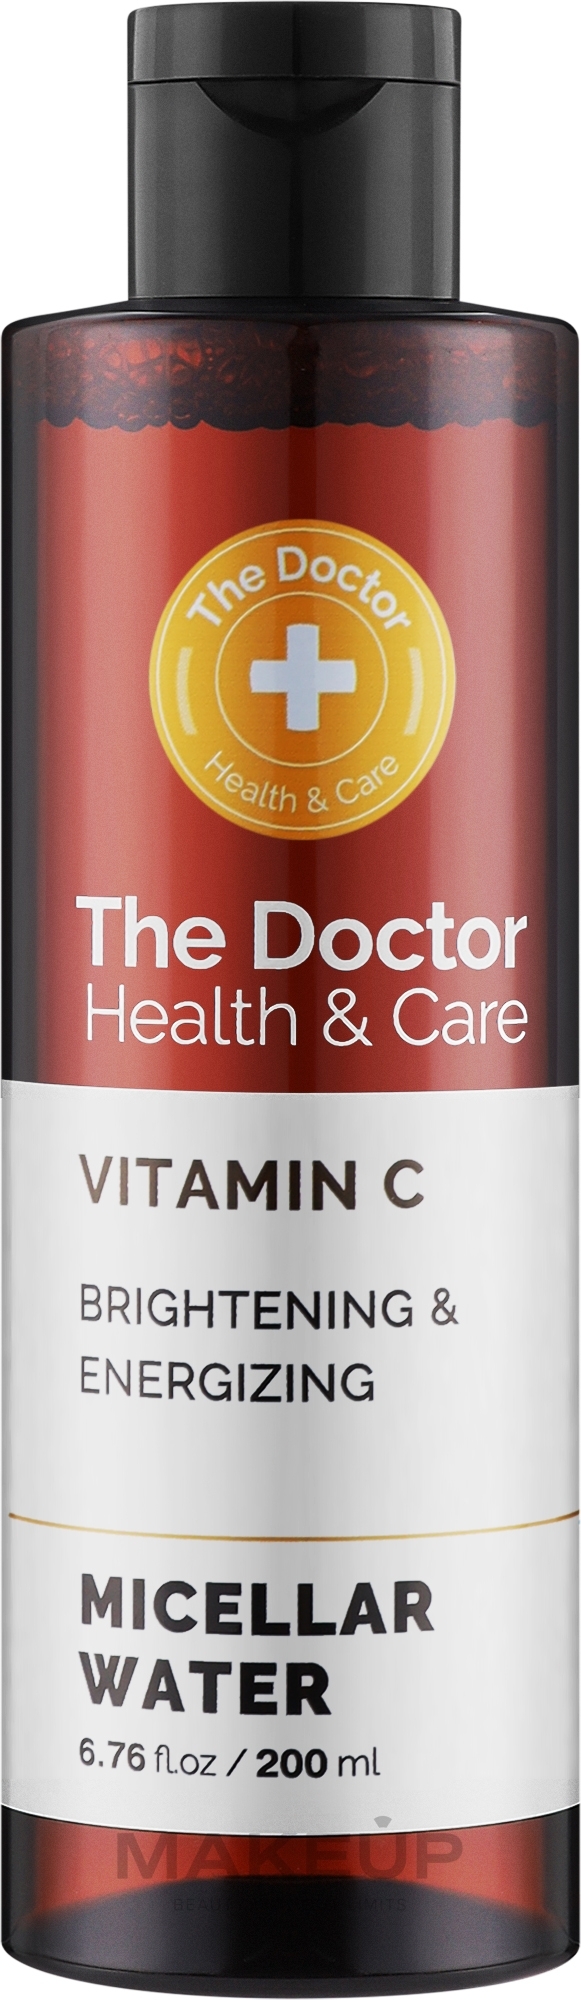 Міцелярна вода - The Doctor Health & Care Vitamin C Micellar Water — фото 200ml